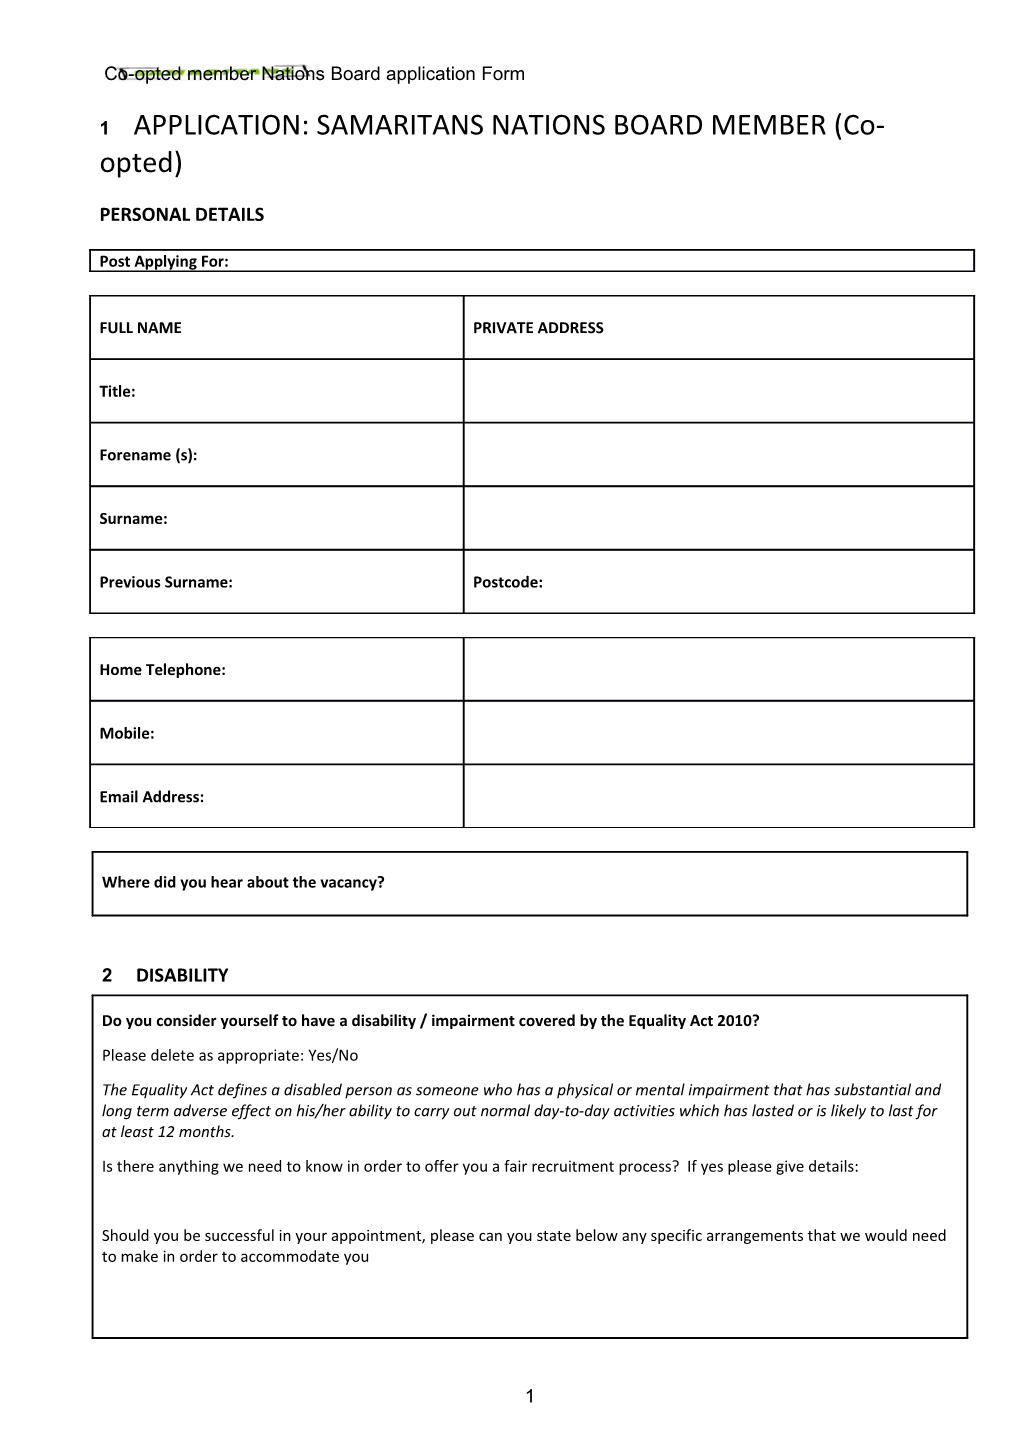 Samaritans Application Form s1